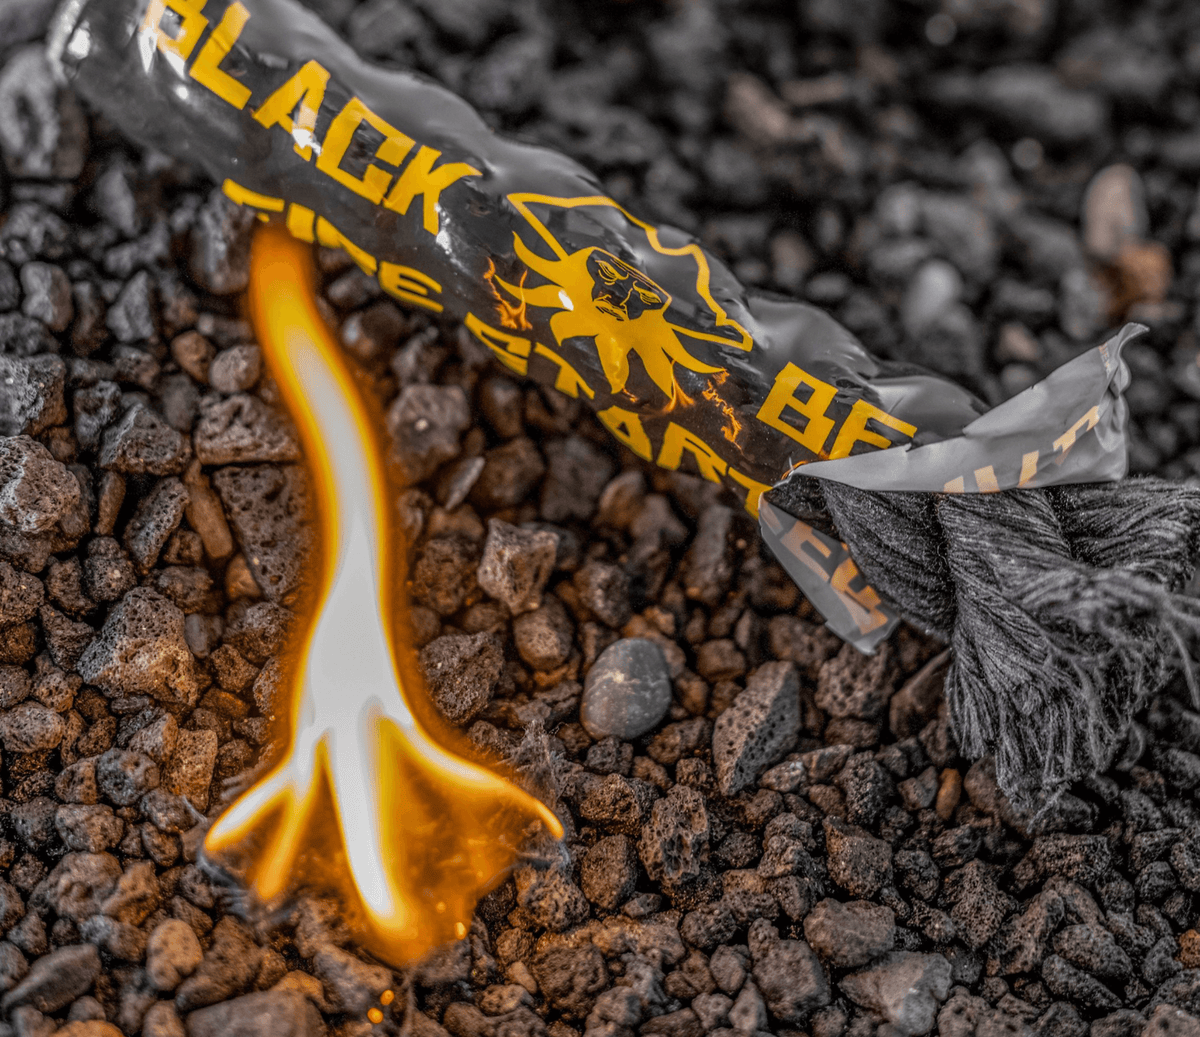 BLACKBEARD FIRE STARTER ROPE SURVIVAL TINDER WEATHERPROOF MADE IN